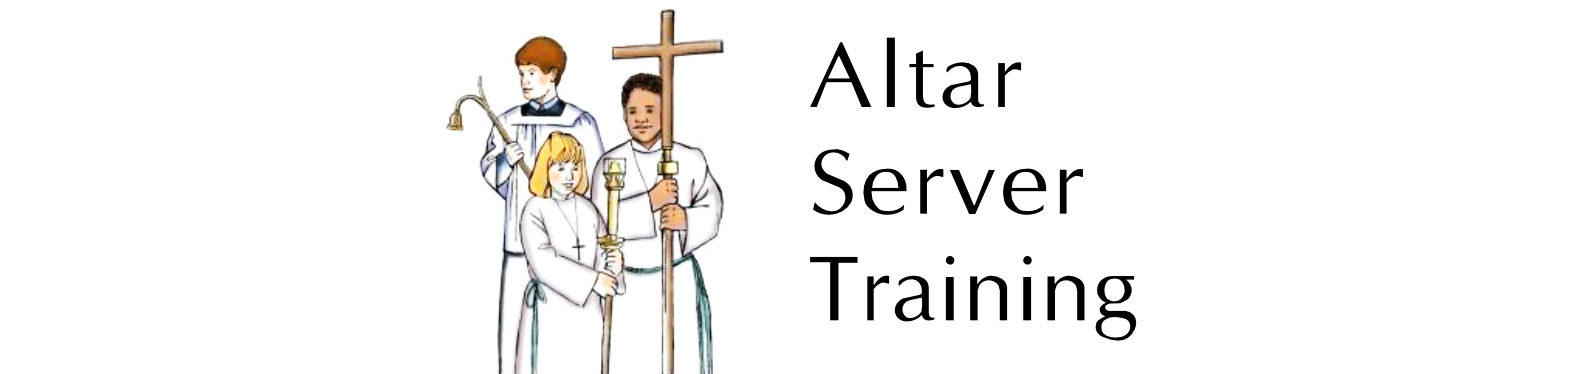 Altar Server Training showing 3 Altar Servers